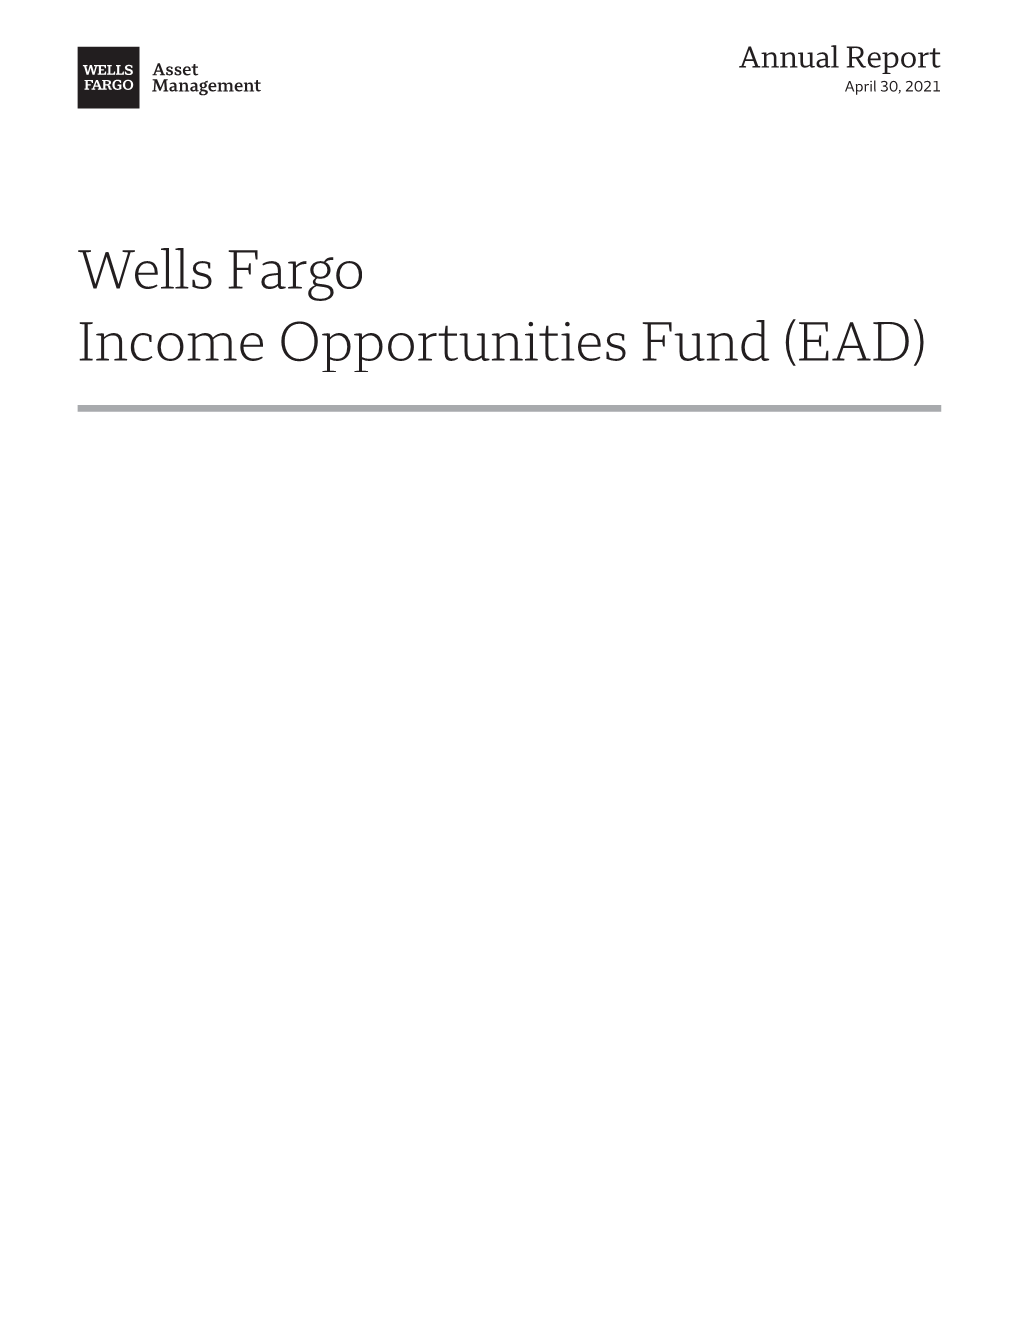 Wells Fargo Income Opportunities Fund (EAD)